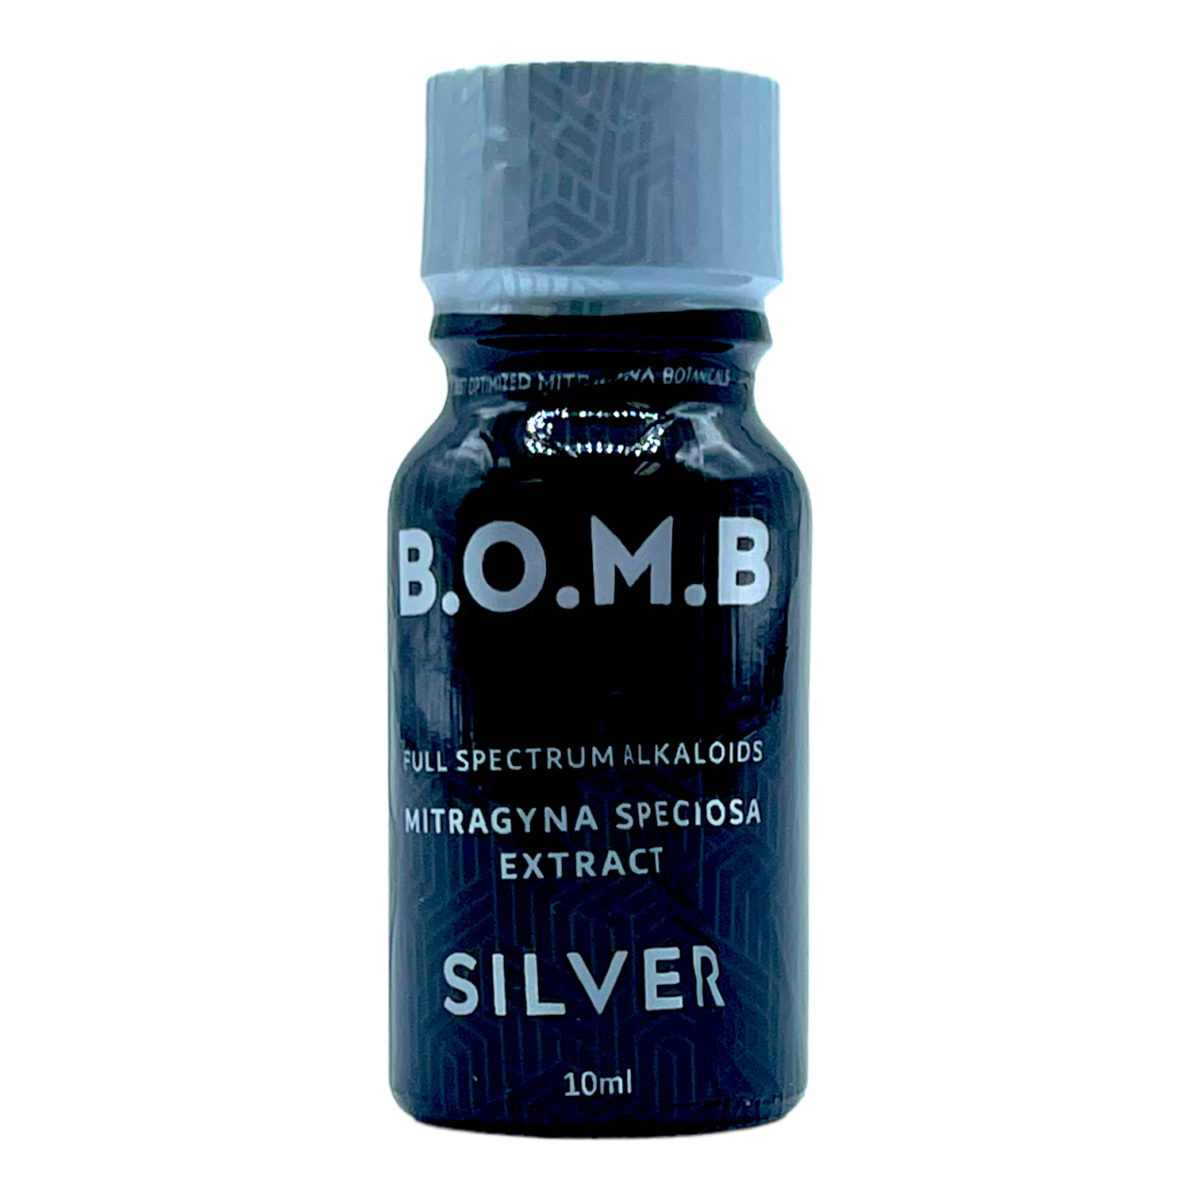 BOMB Silver Kratom Extract Shot, 10ml